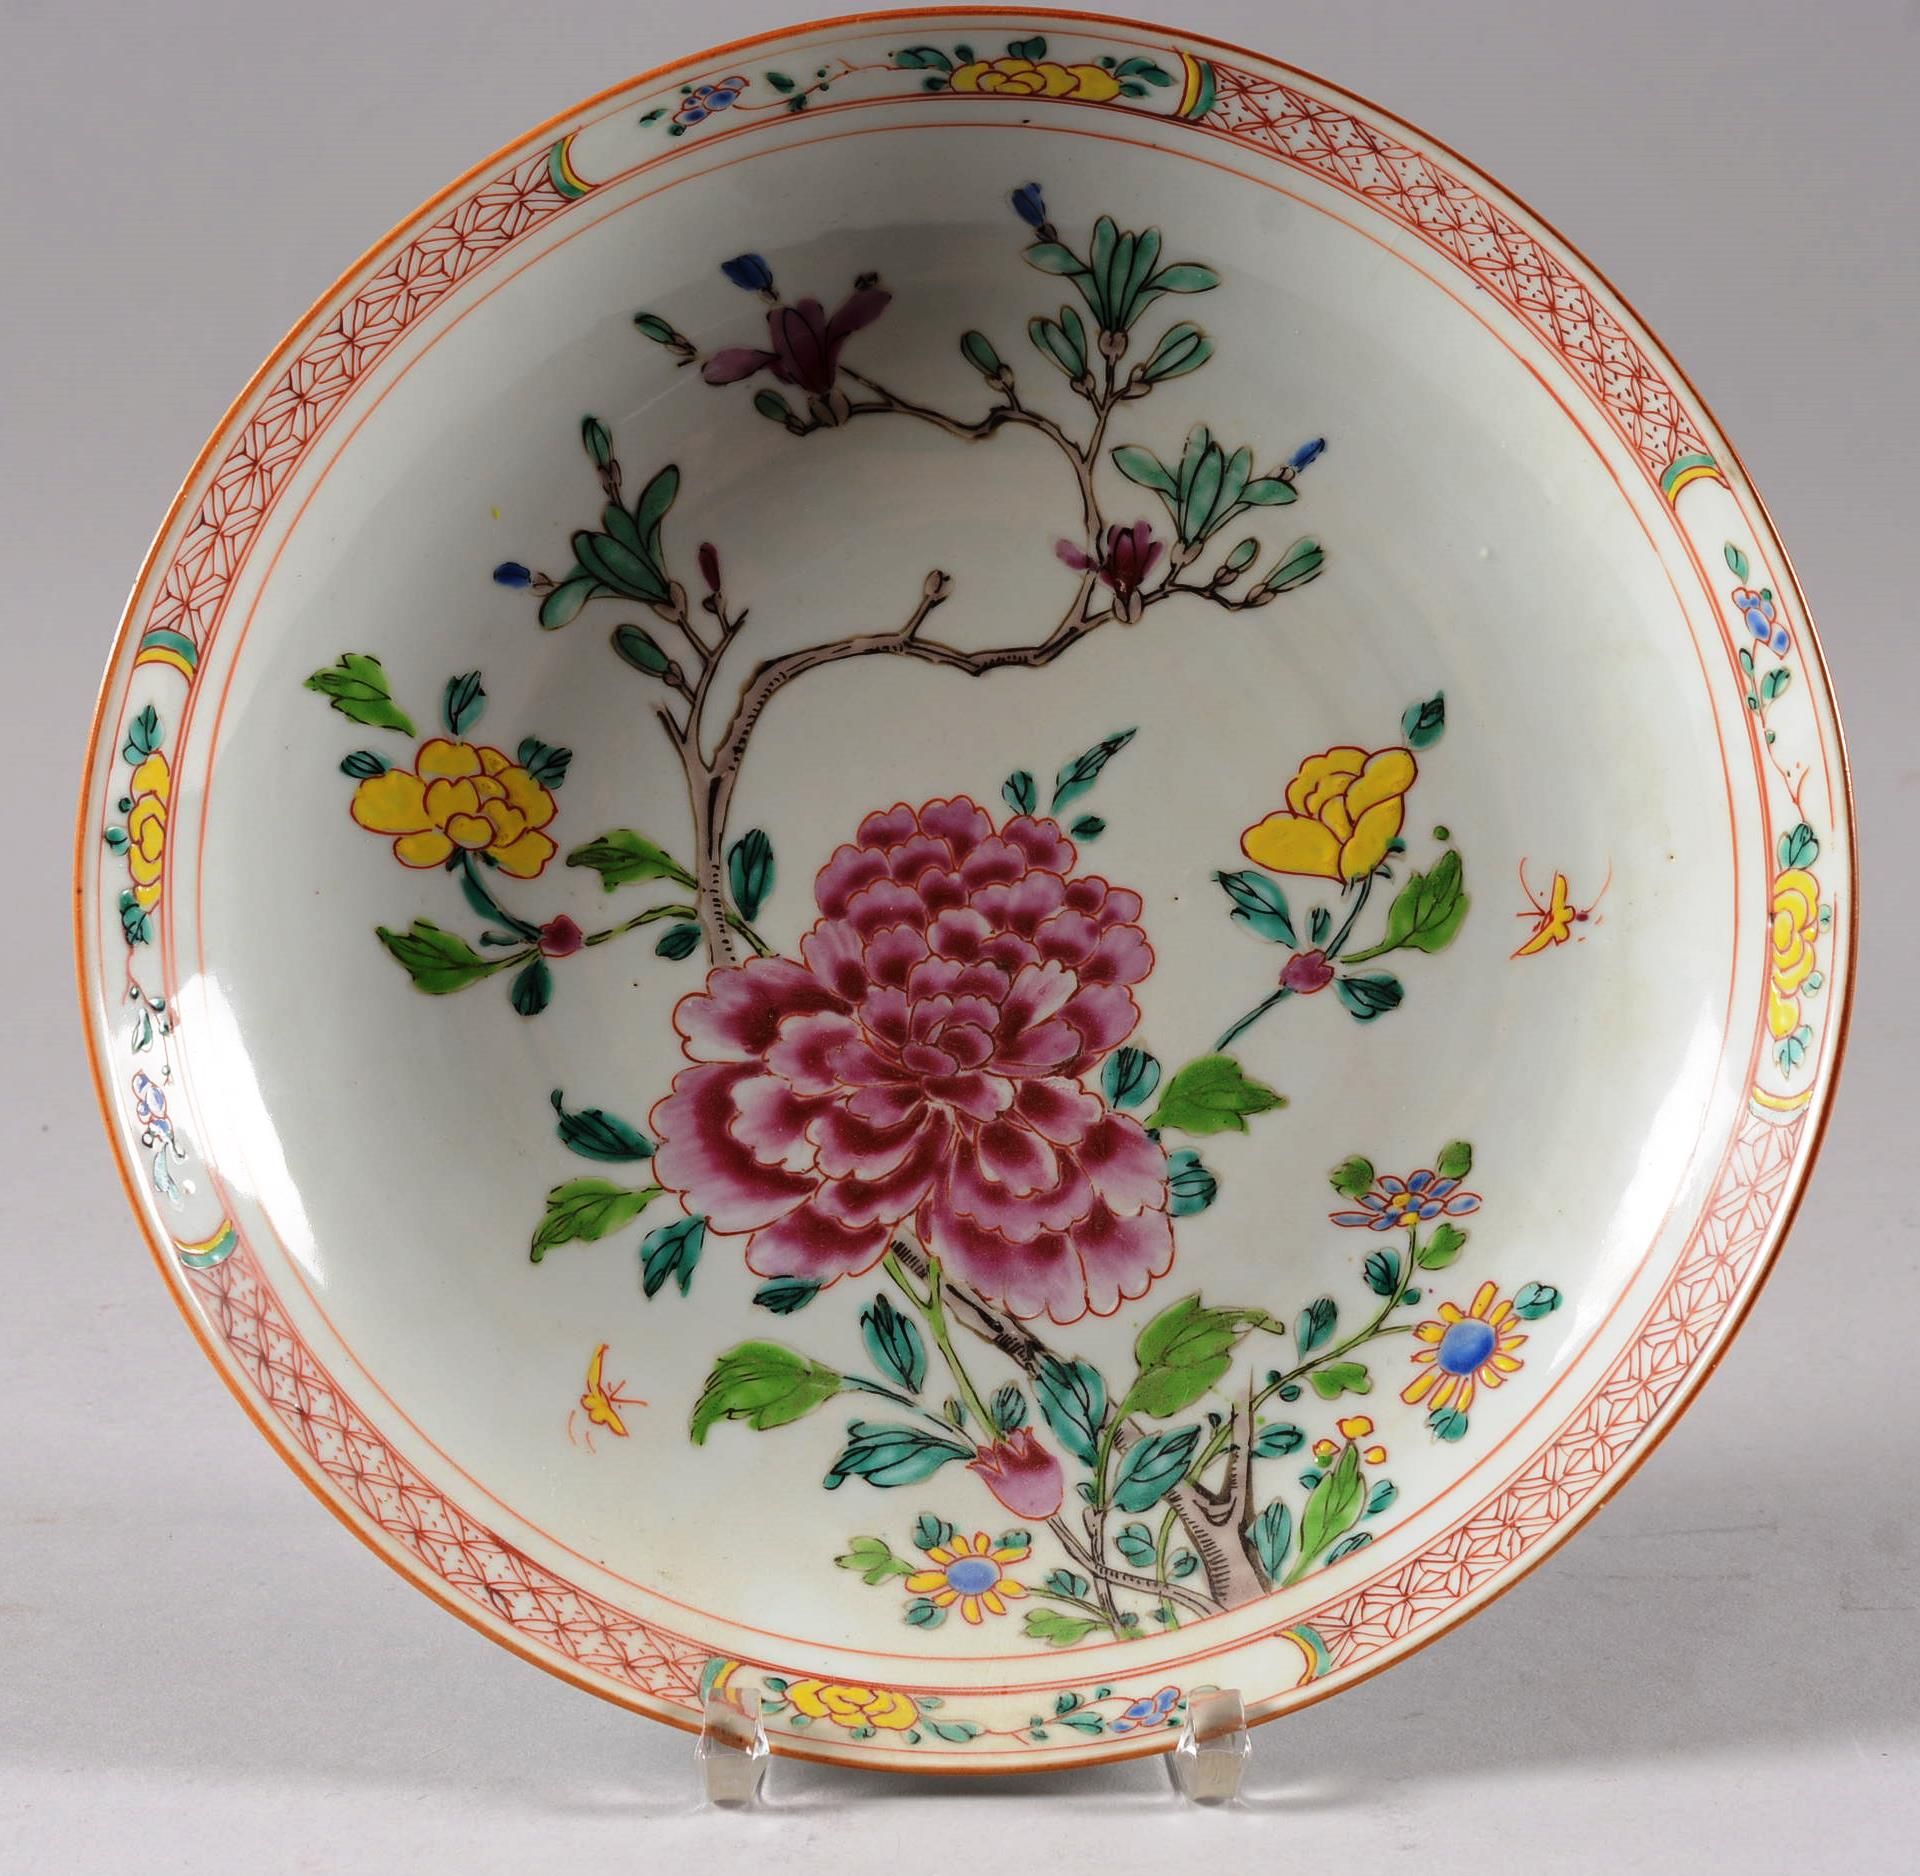 Coupe circulaire en porcelaine chinoise 中国。

中国瓷器圆形碗。18世纪。

直径：27.5厘米